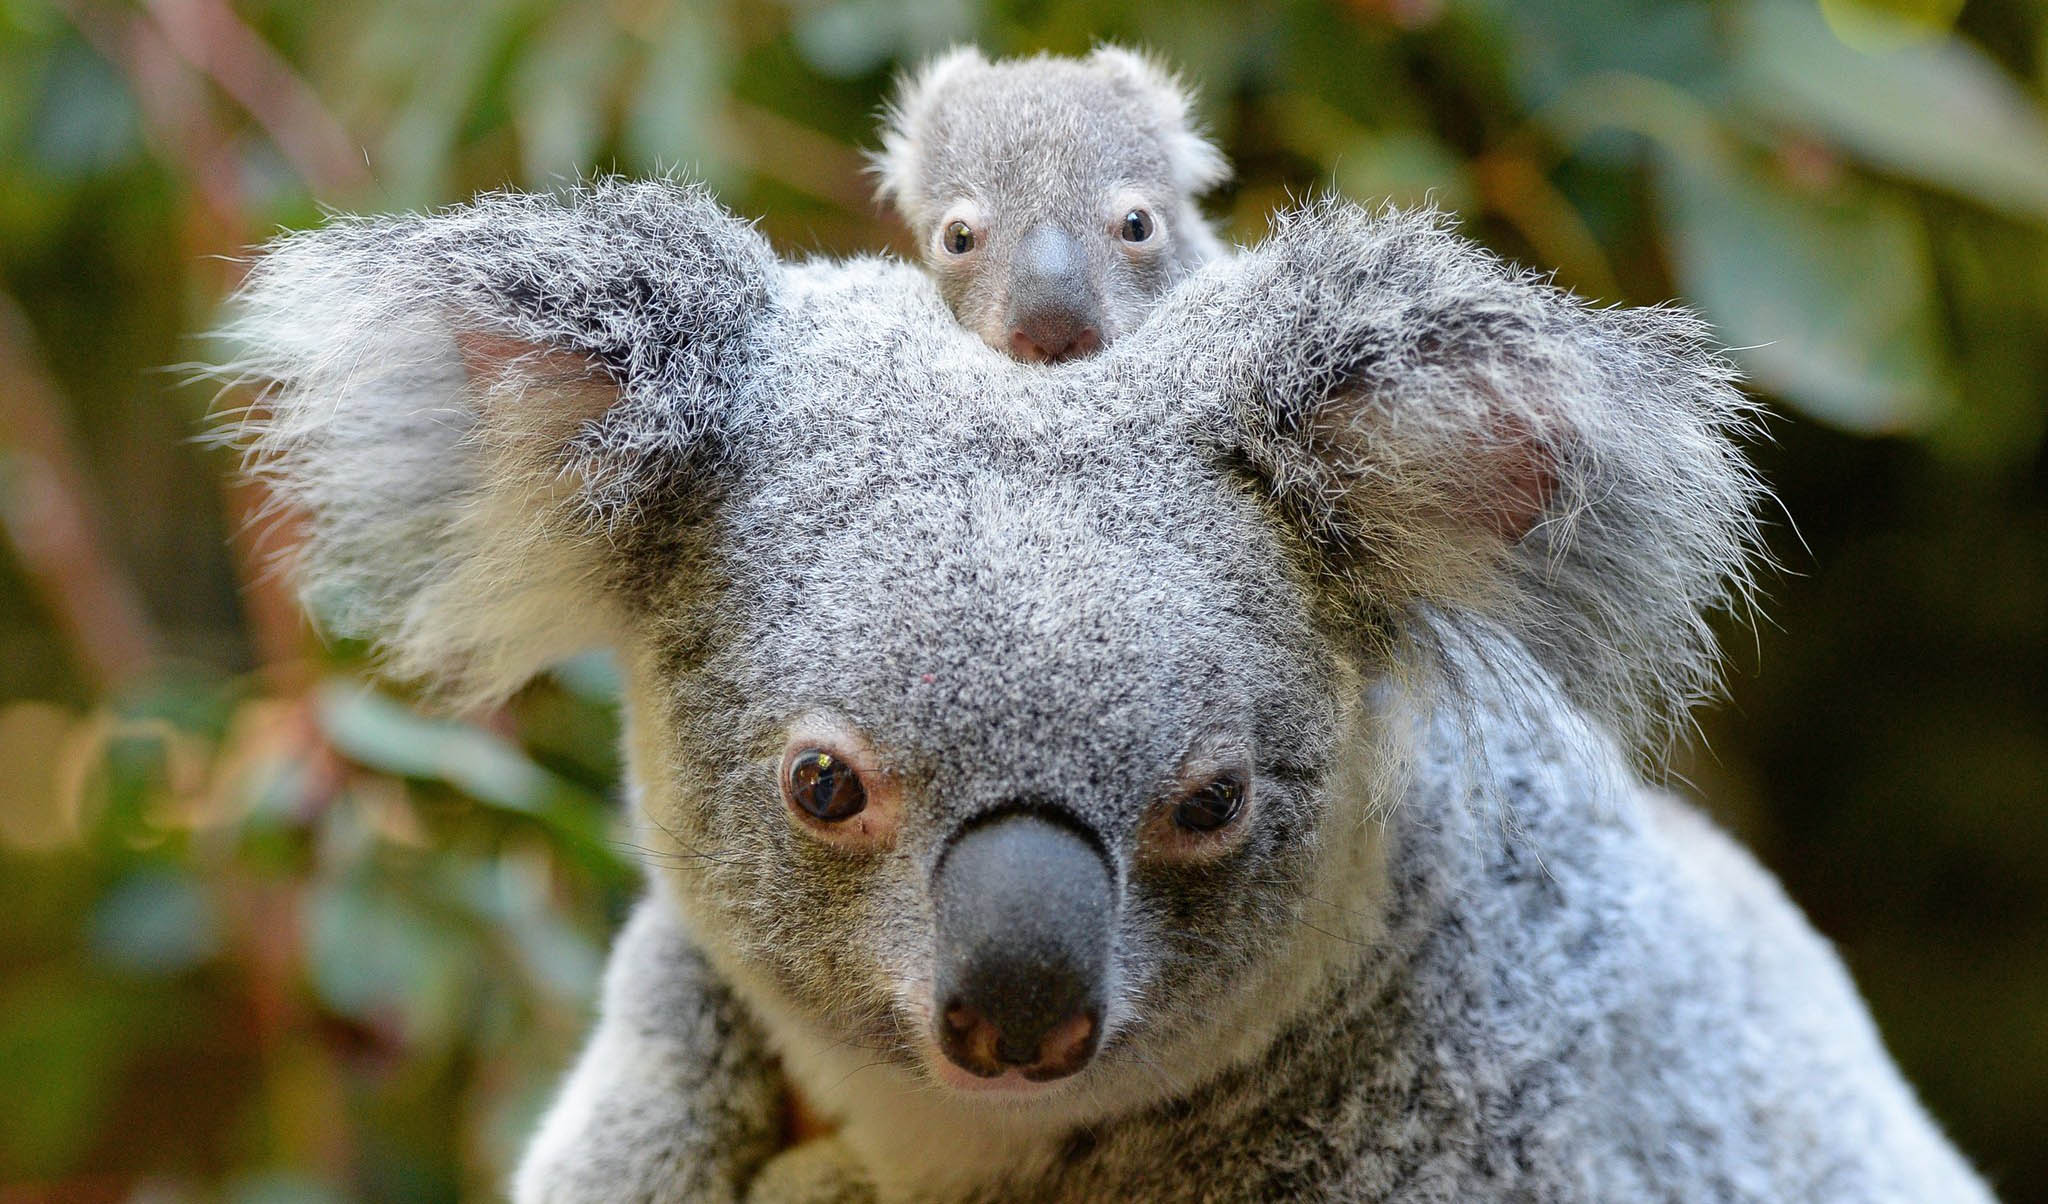 A Big Milestone for a Baby Koala at the Columbus Zoo